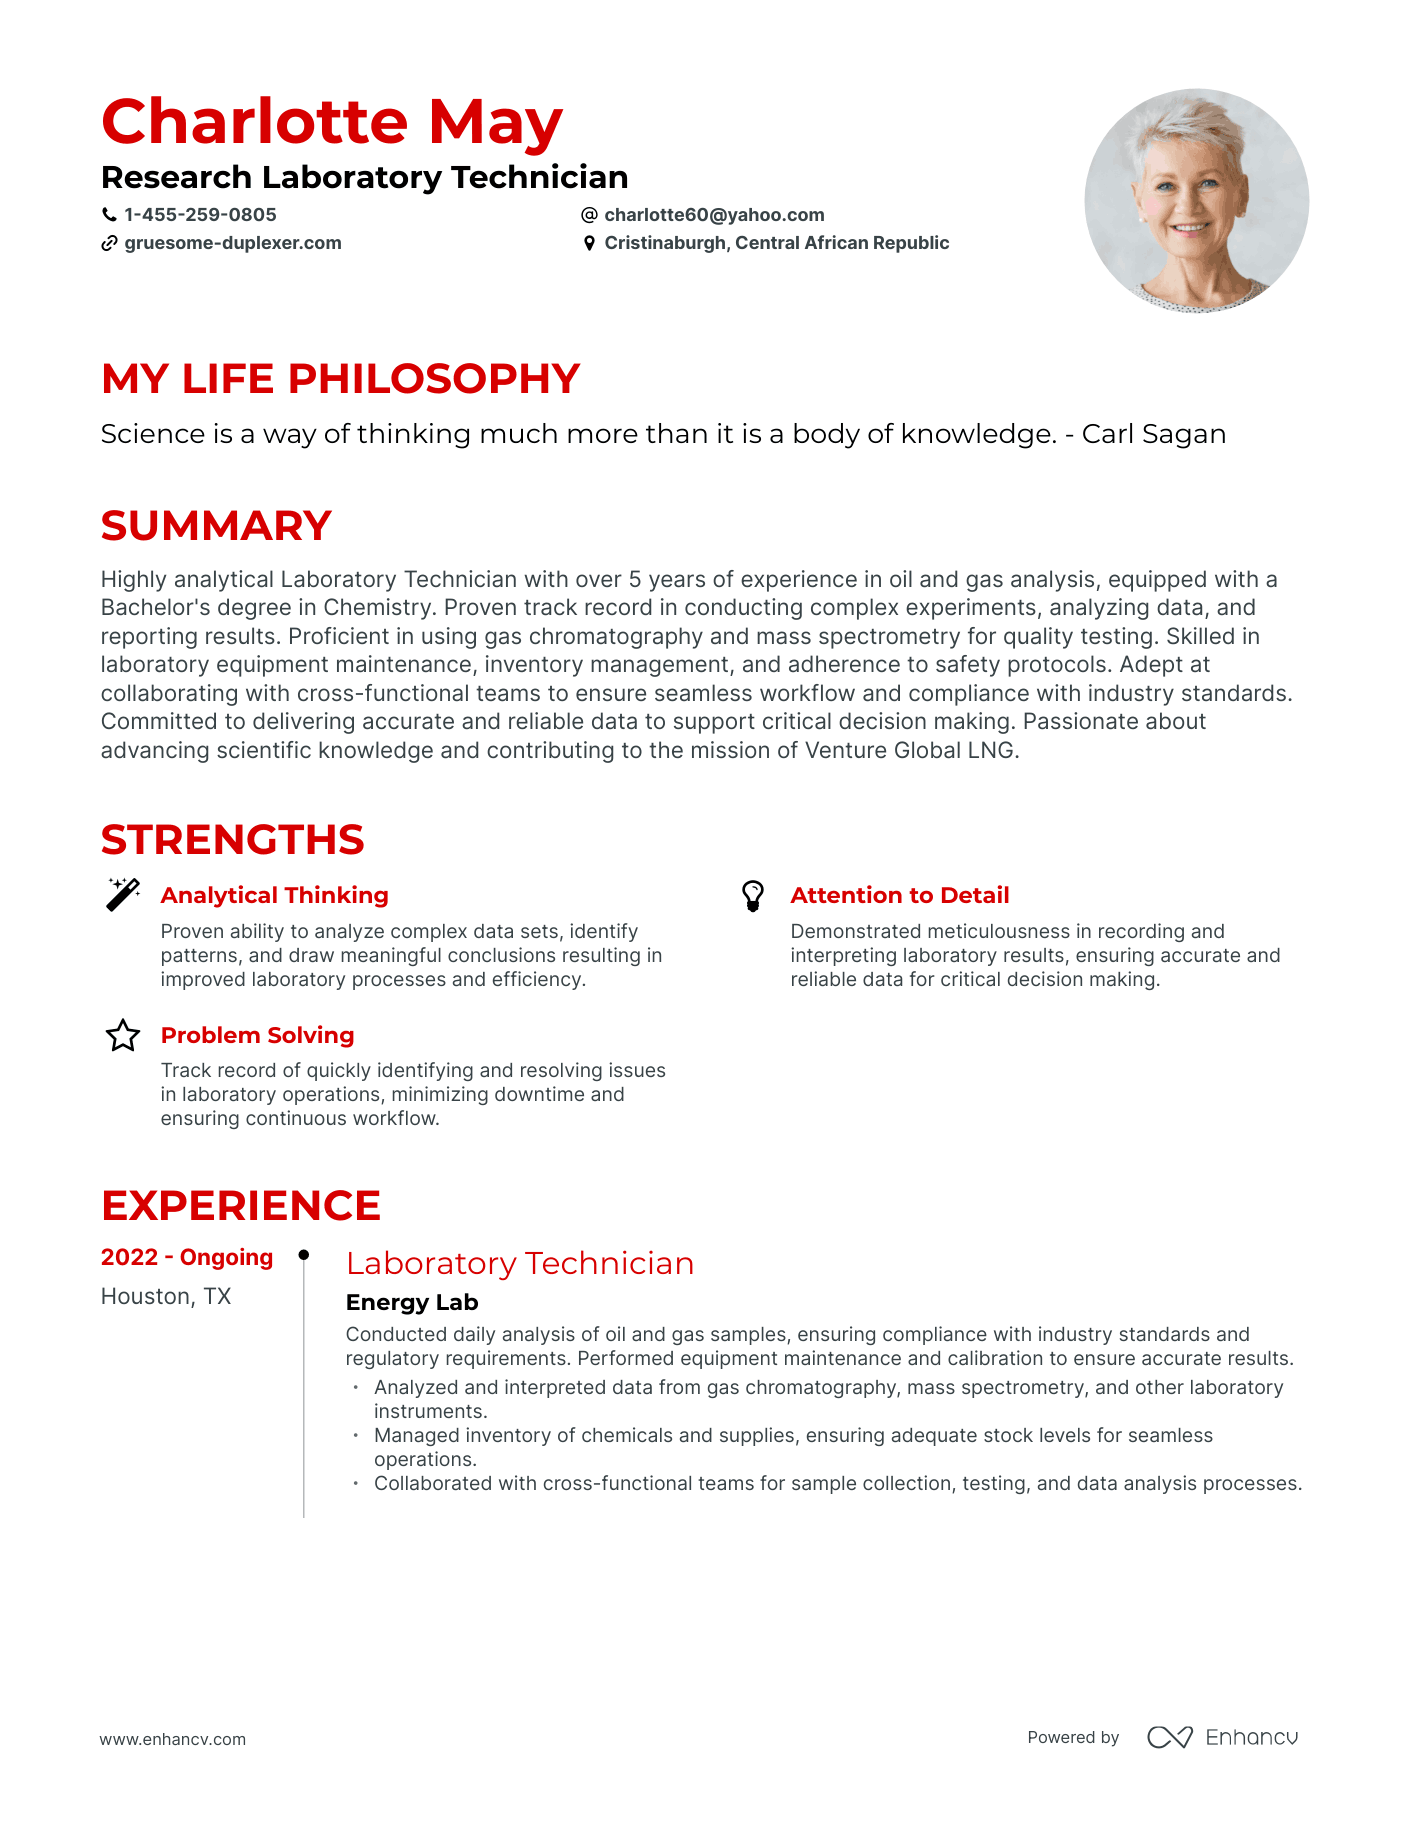 Creative Research Laboratory Technician Resume Example